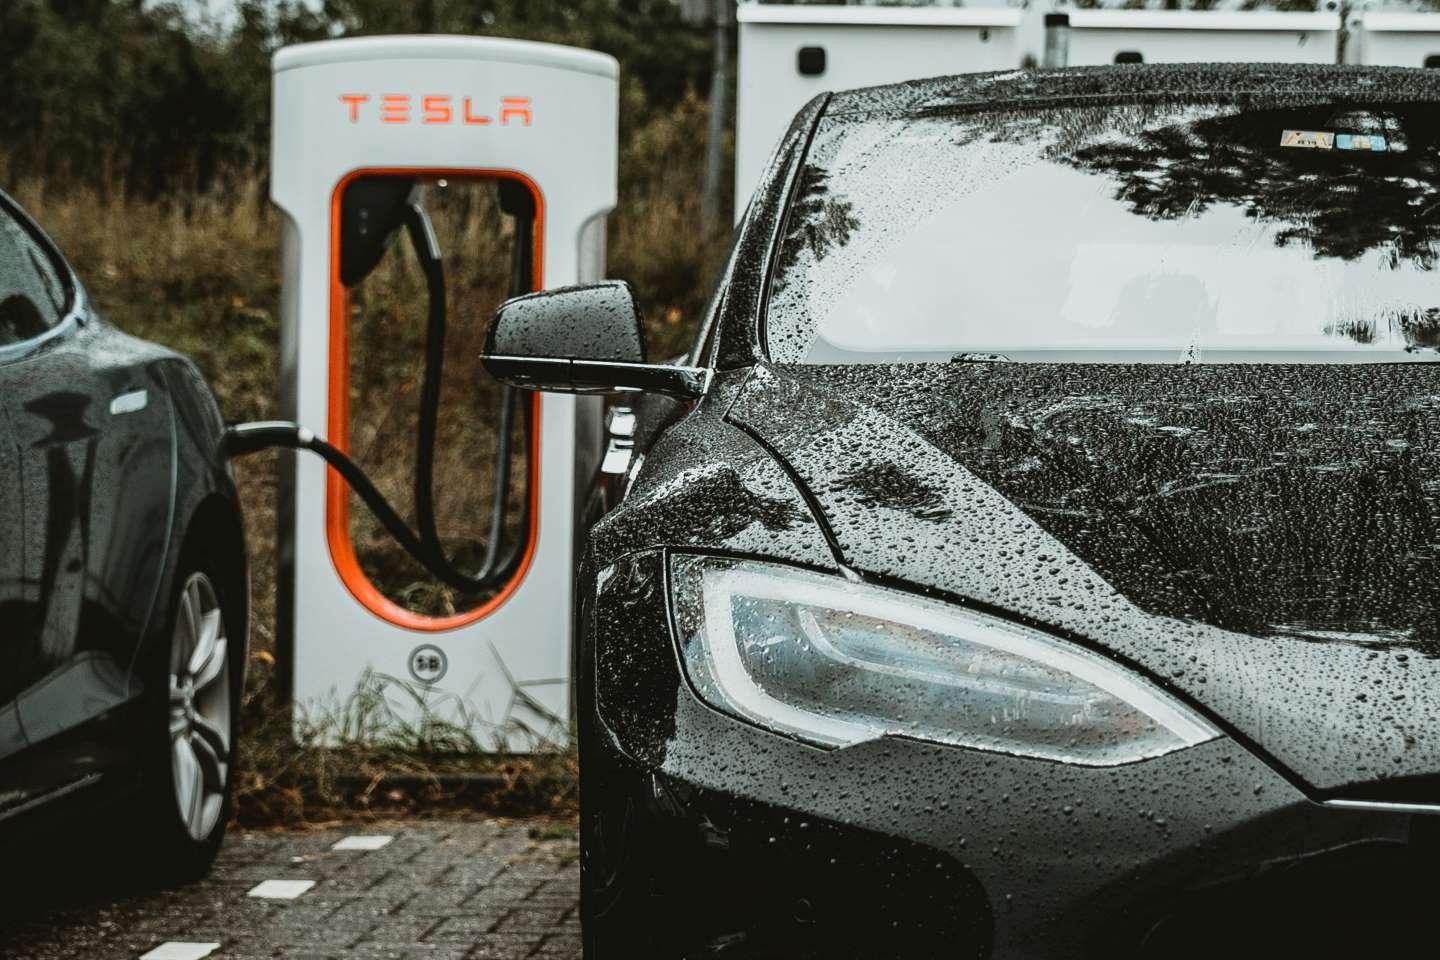 Tesla’s success drives the battery metals race